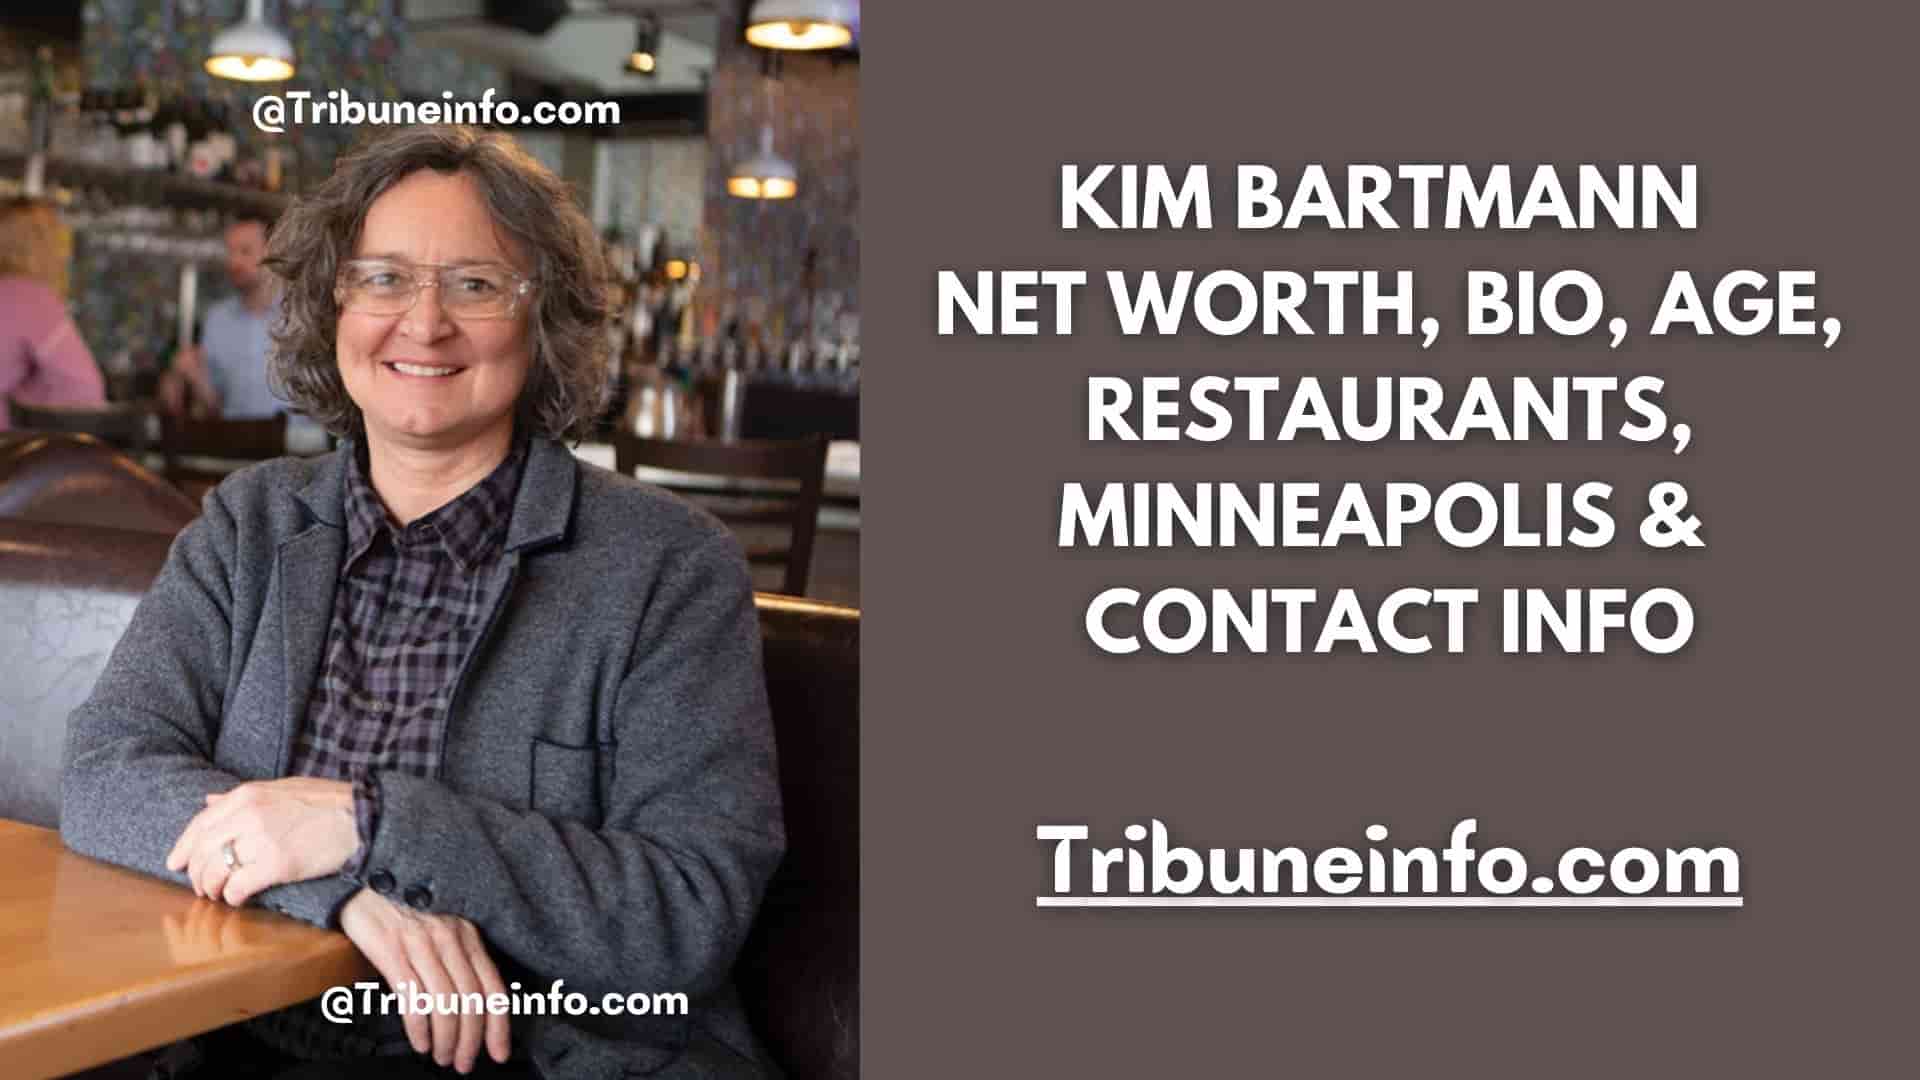 Kim Bartmann Net Worth, Bio, Age, Restaurants, Minneapolis & Contact Info